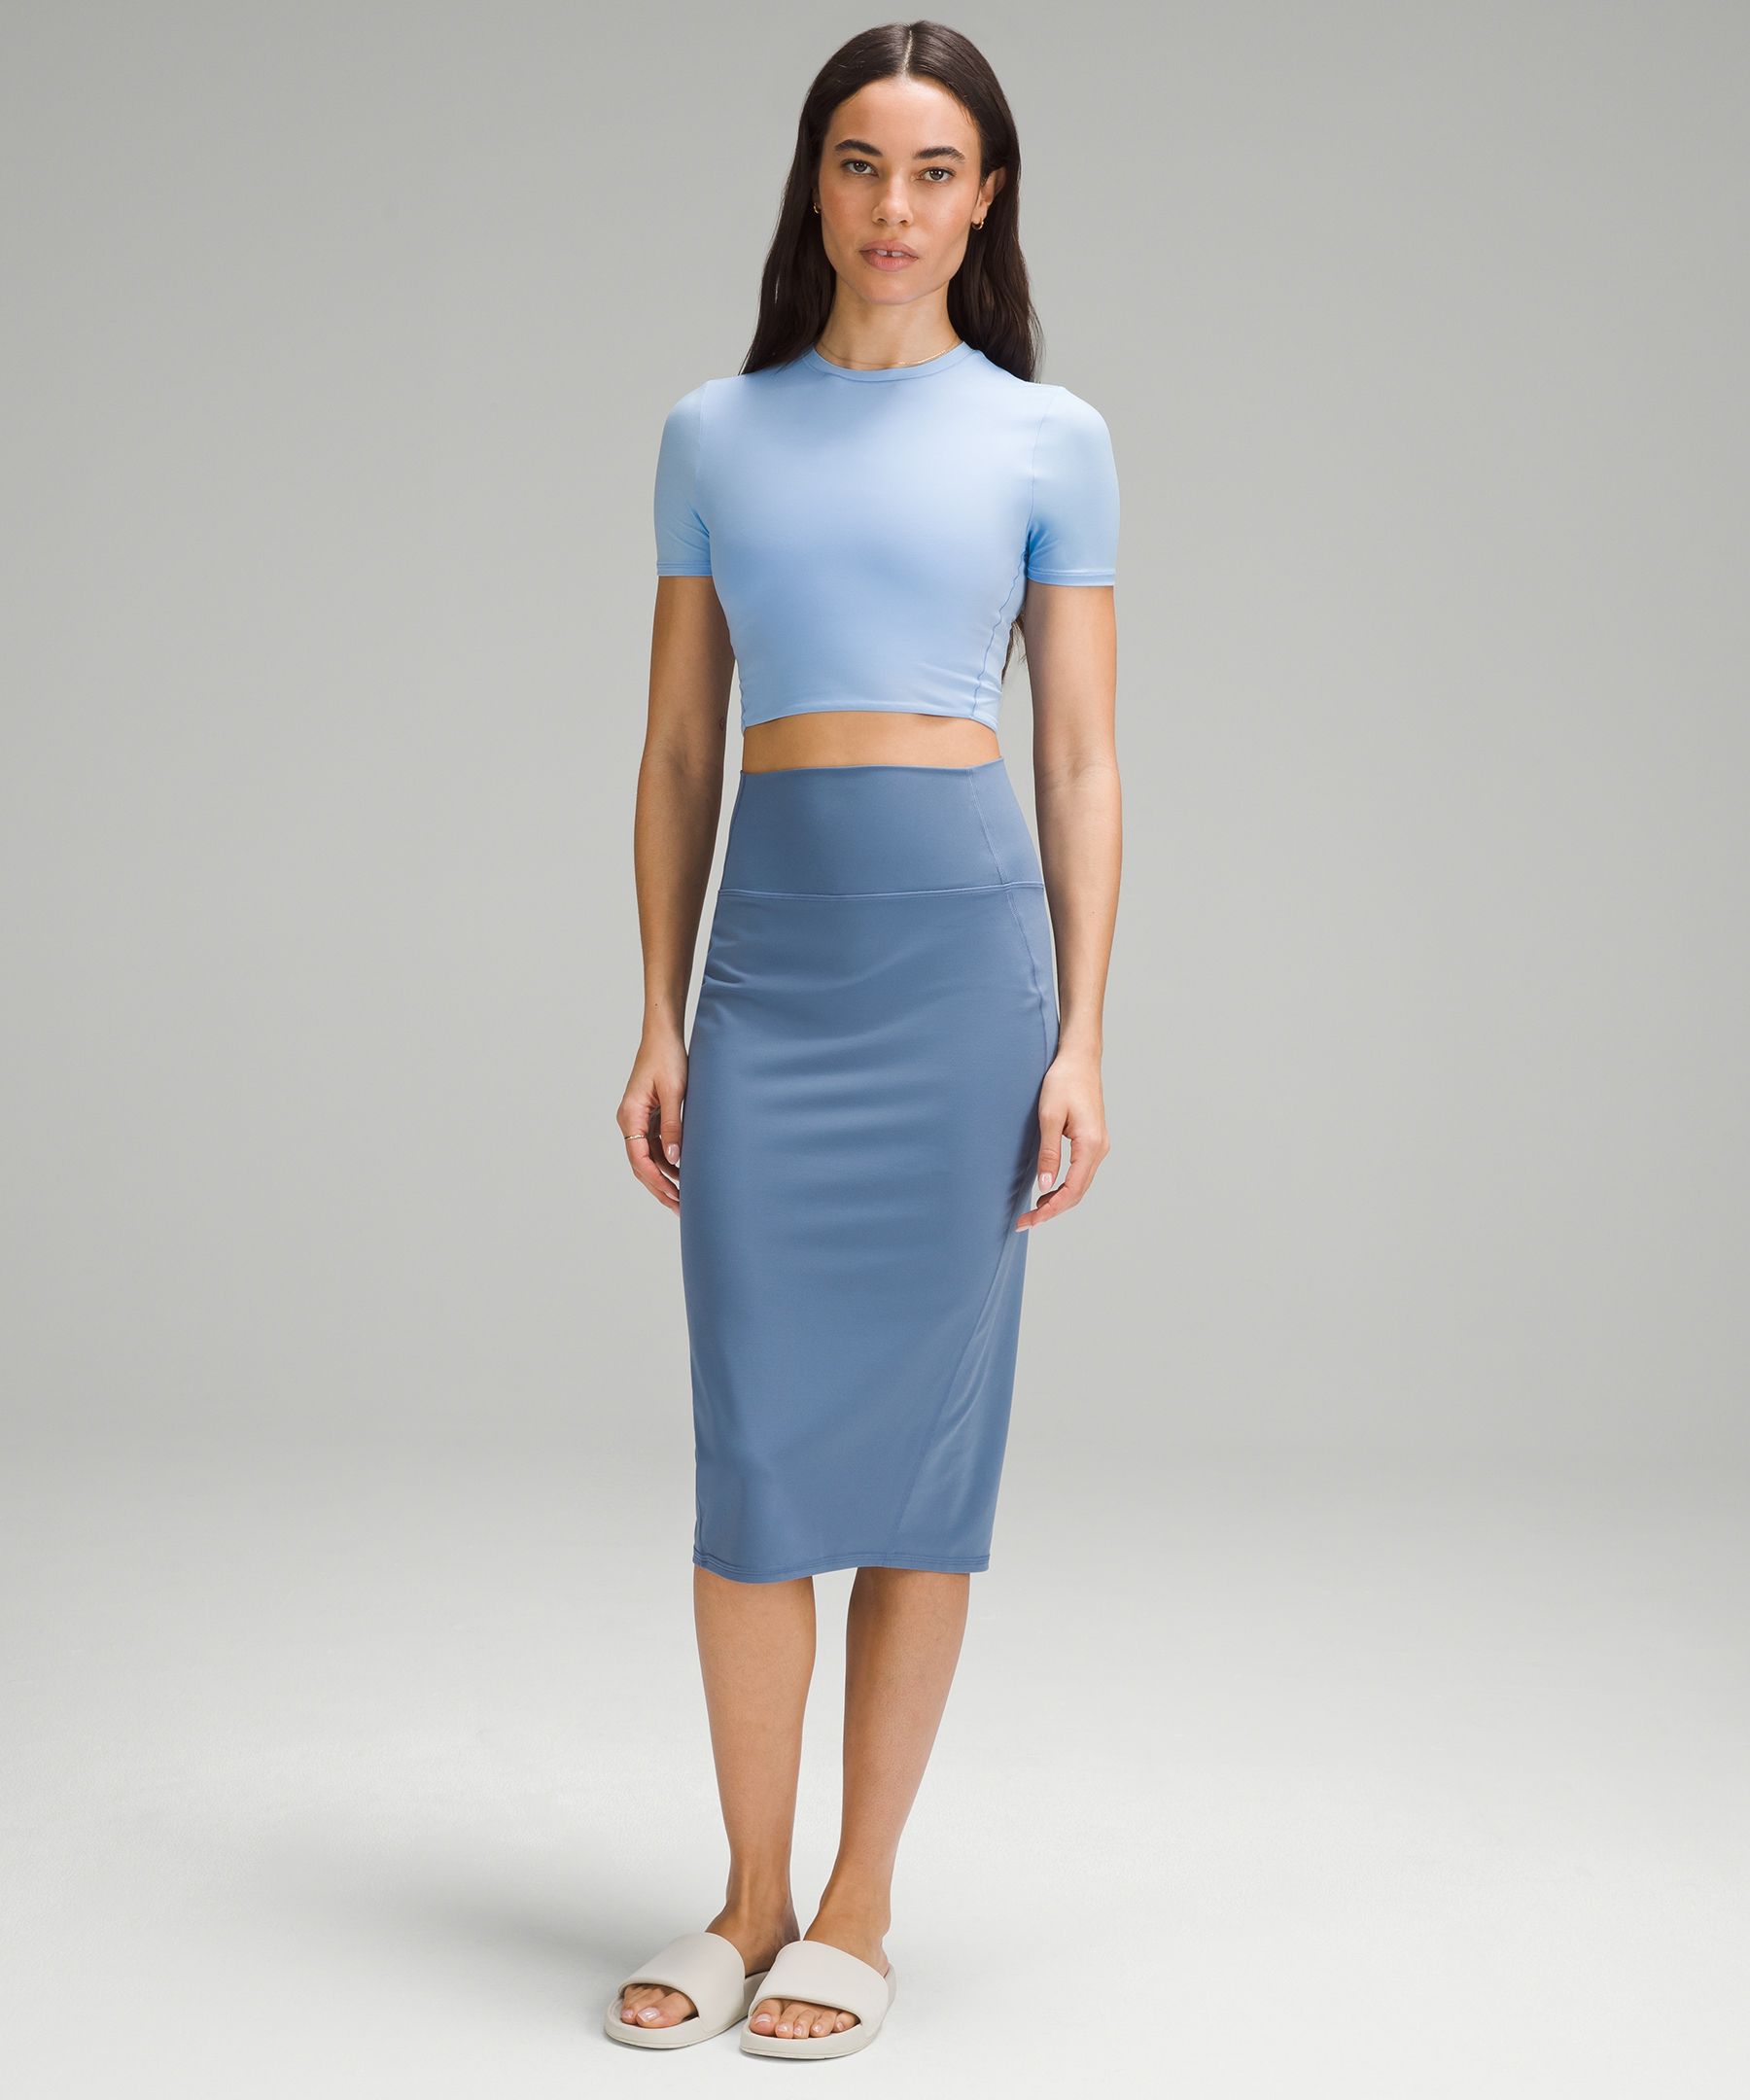 Nulu Slim-Fit High-Rise Skirt | Women's Skirts